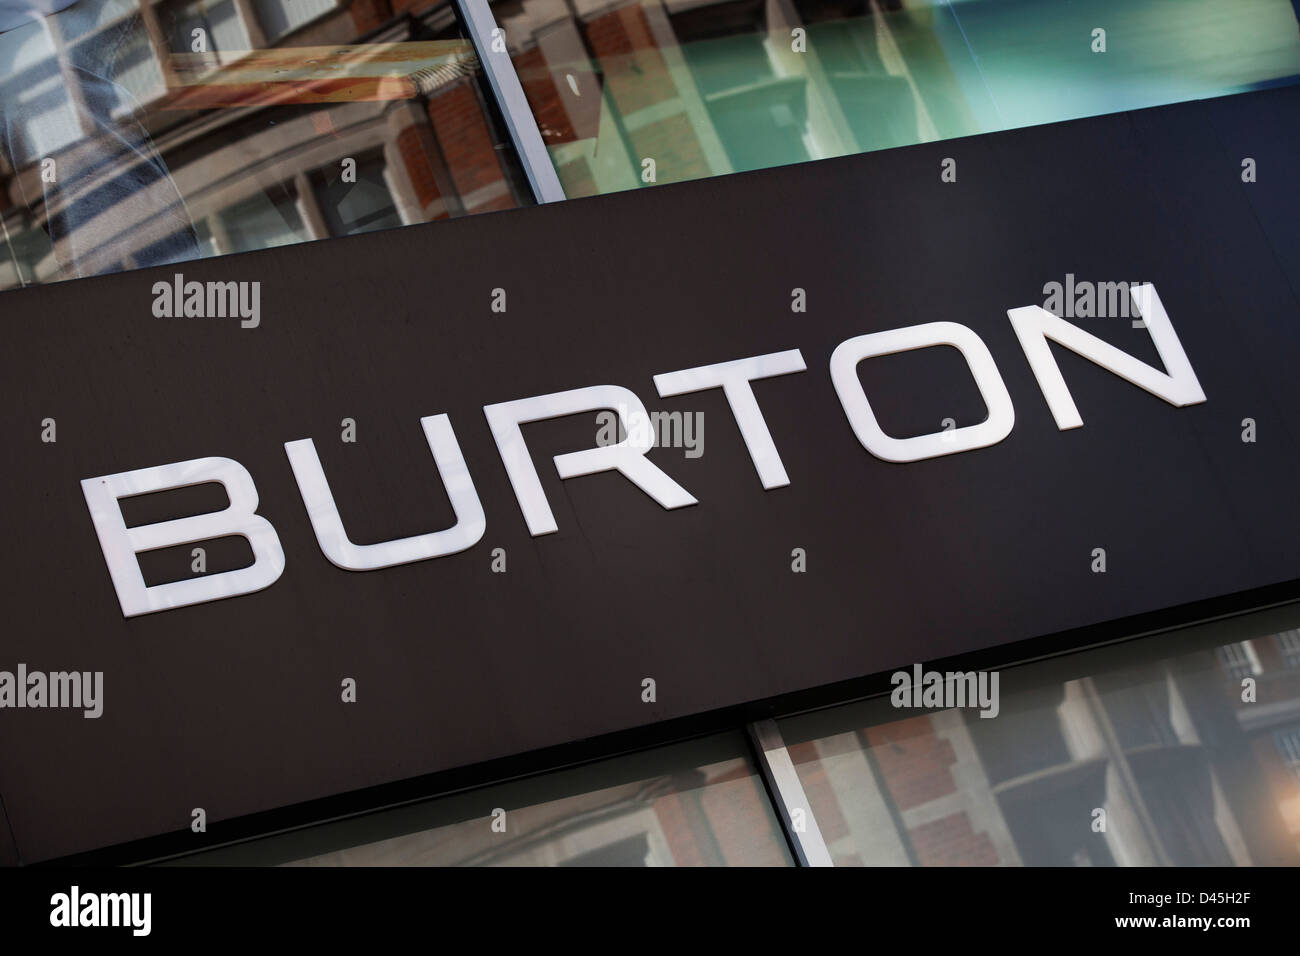 Sign for men's clothes shop Burton Stock Photo - Alamy